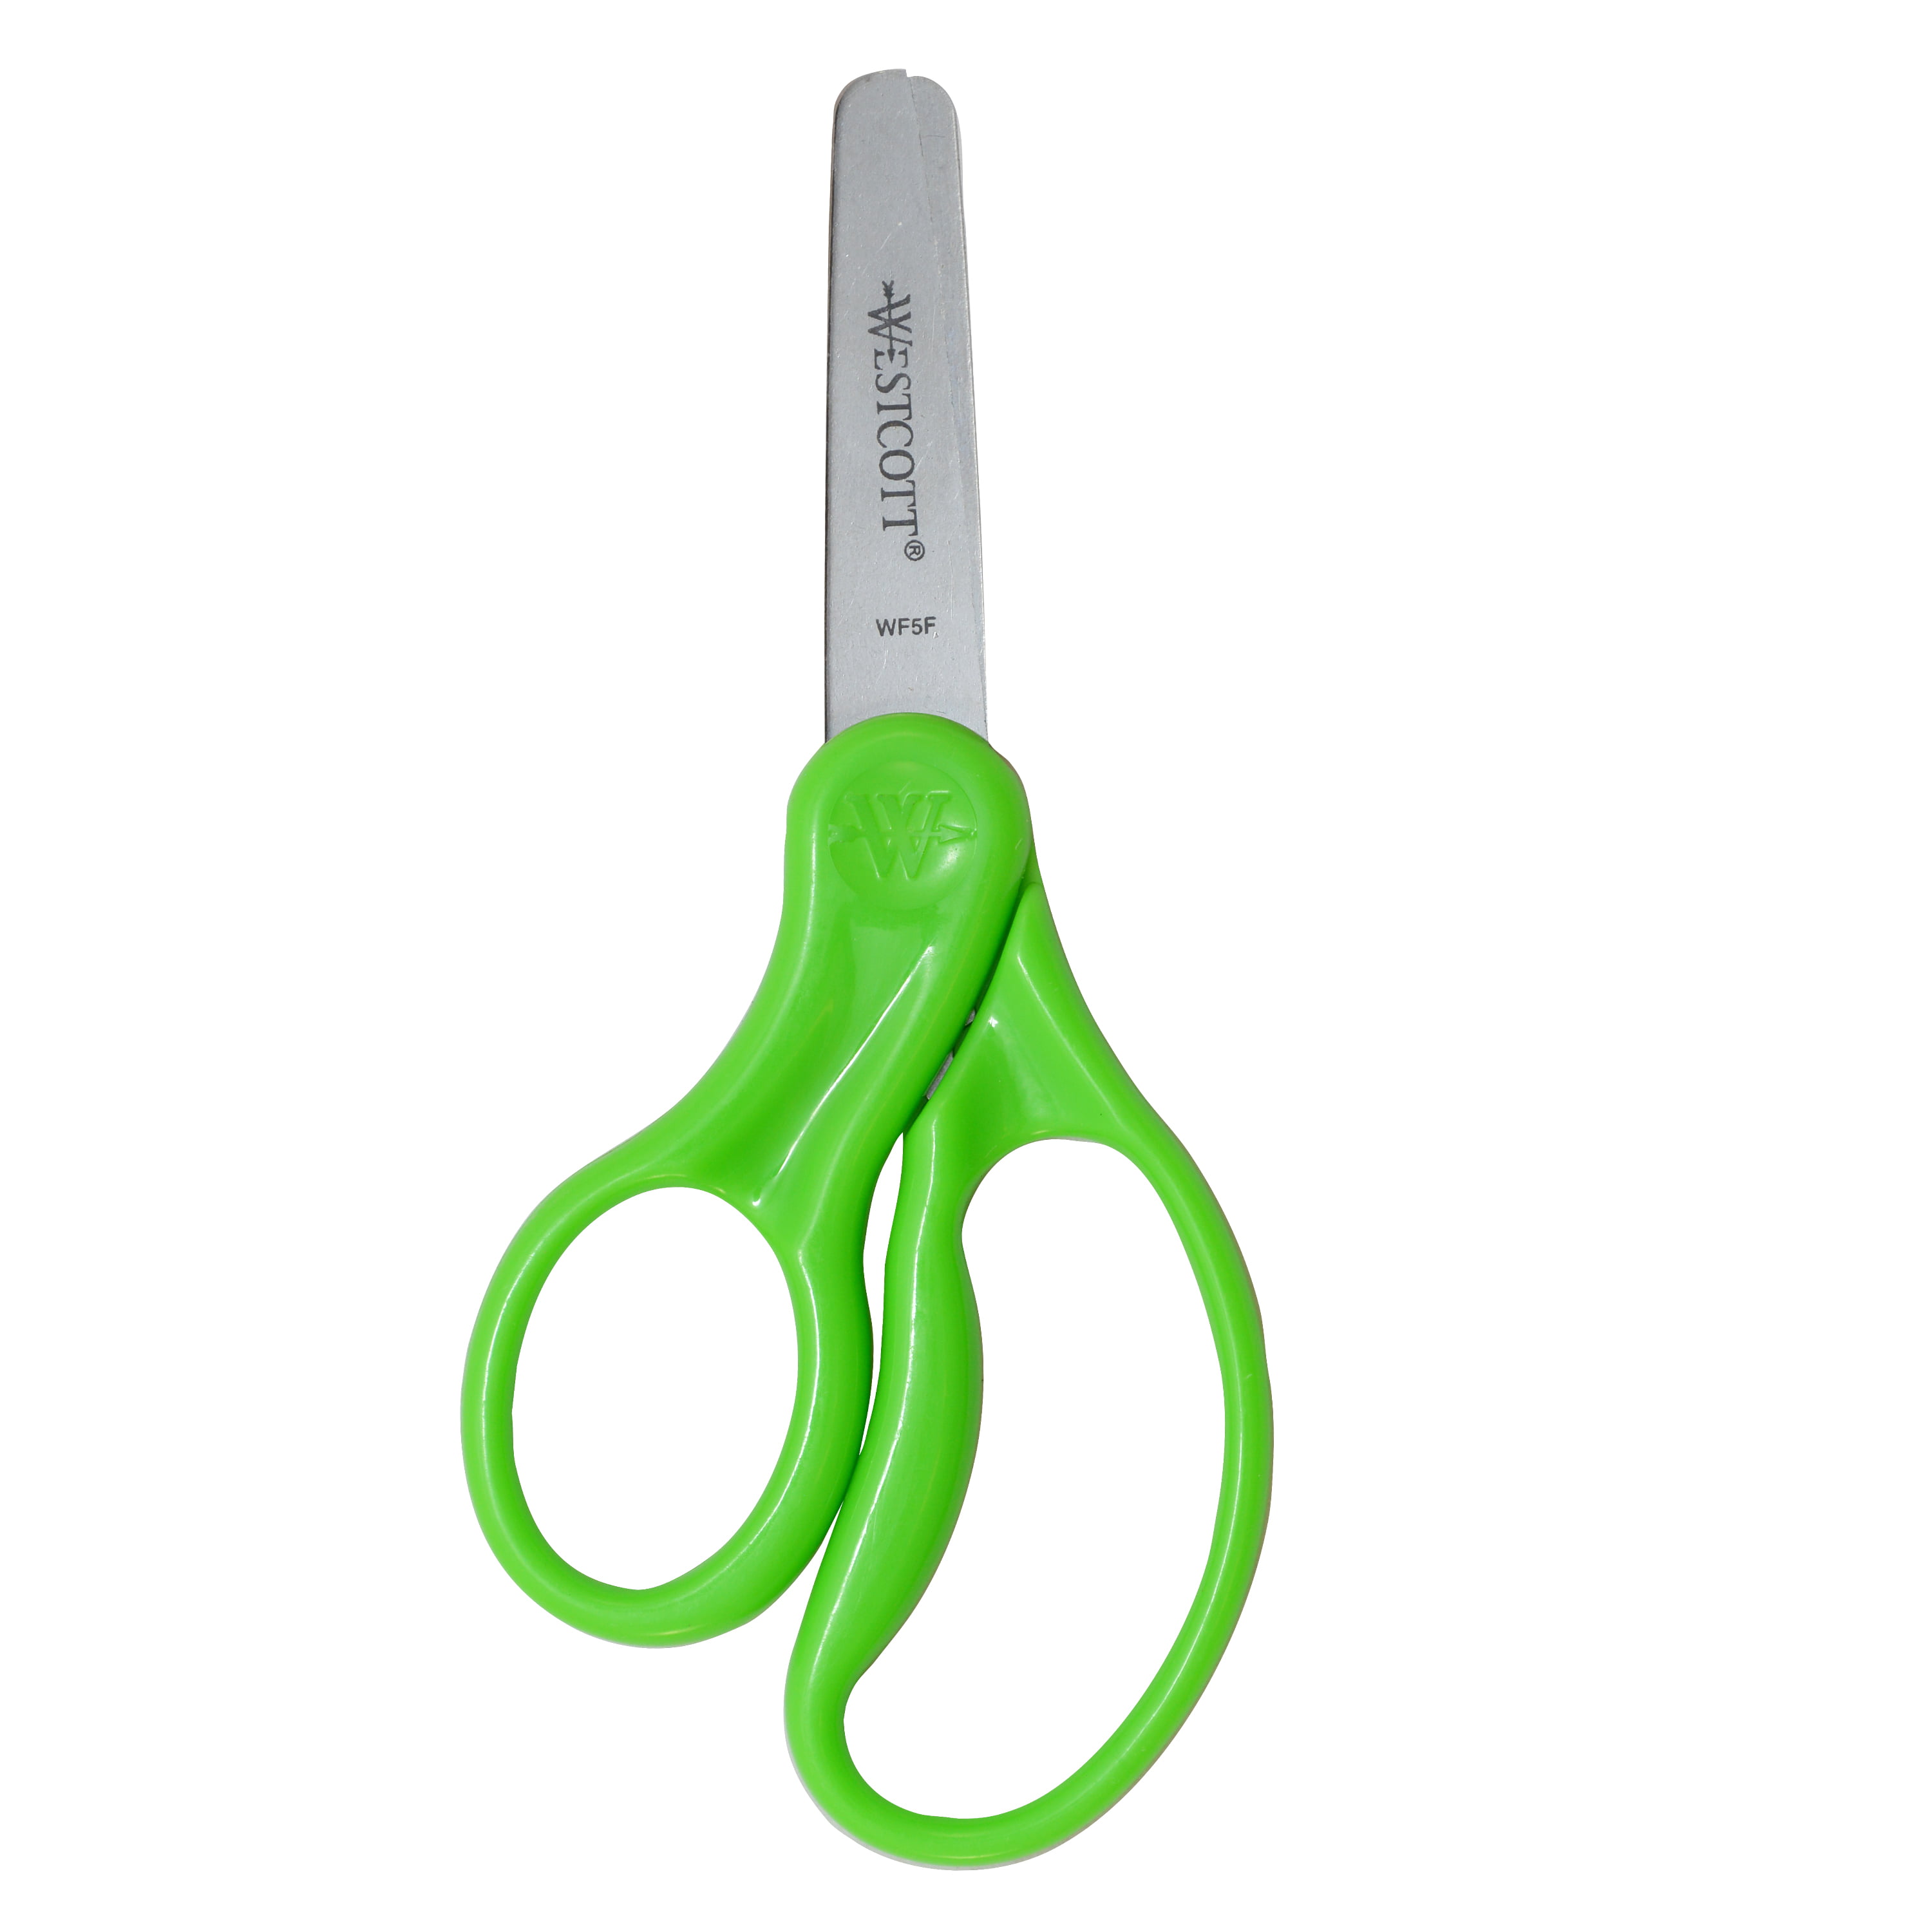 Cuttte 5” Kids Scissors, 3pcs Child Scissors, Small Blunt Tip Scissors for  Kids, Kindergarten Beginner Scissors for Crafting, Right Handed Scissors  for Cutting Paper - Yahoo Shopping